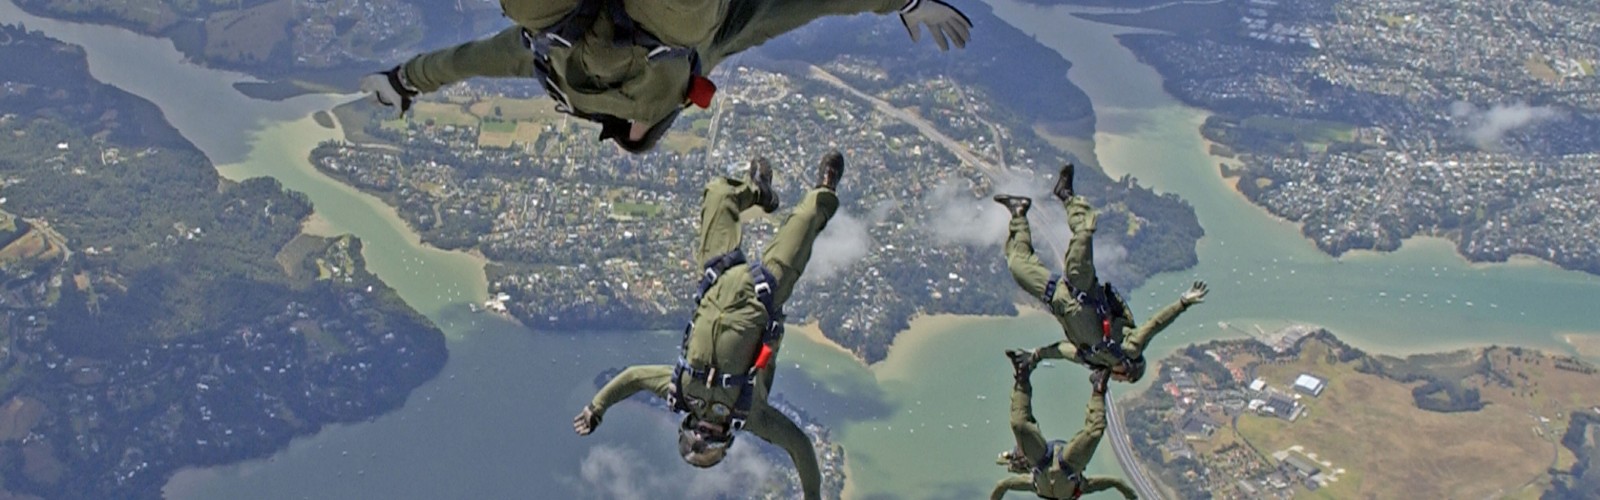 af parachute jump instructor 08 full width